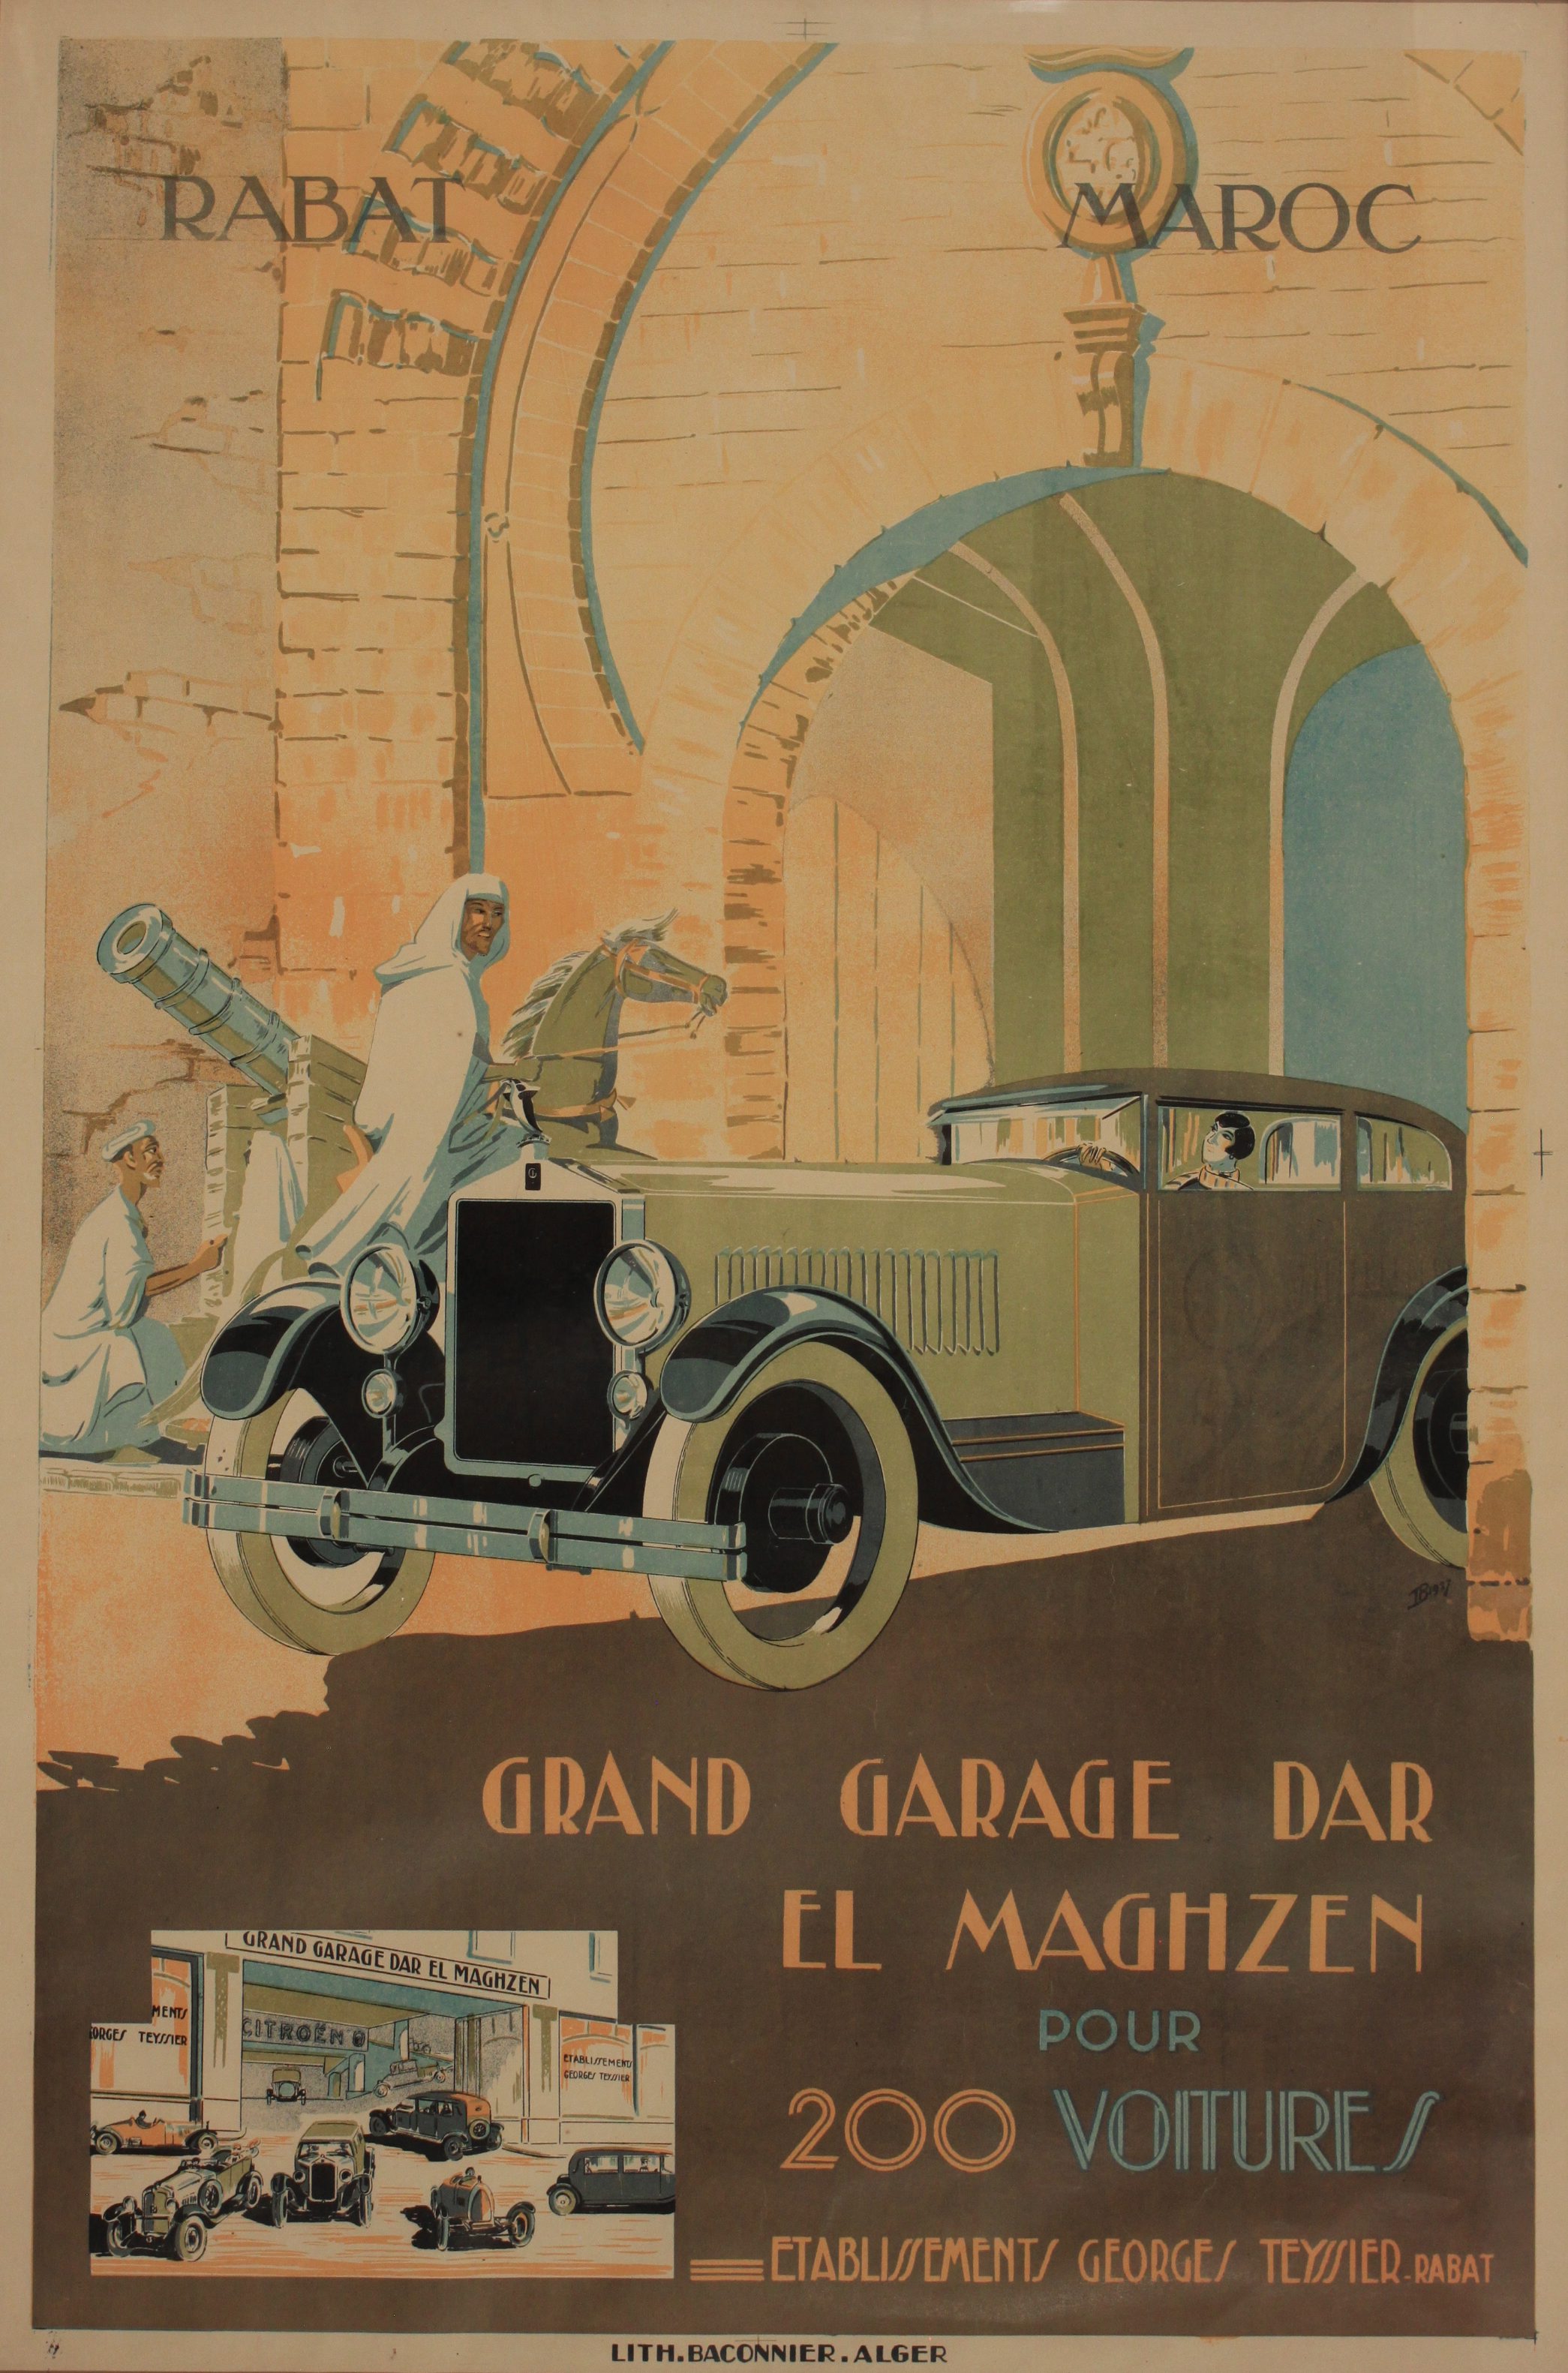 Grand Garage Dar El Maghzen in Rabat, Morocco, 1927. Onslows image